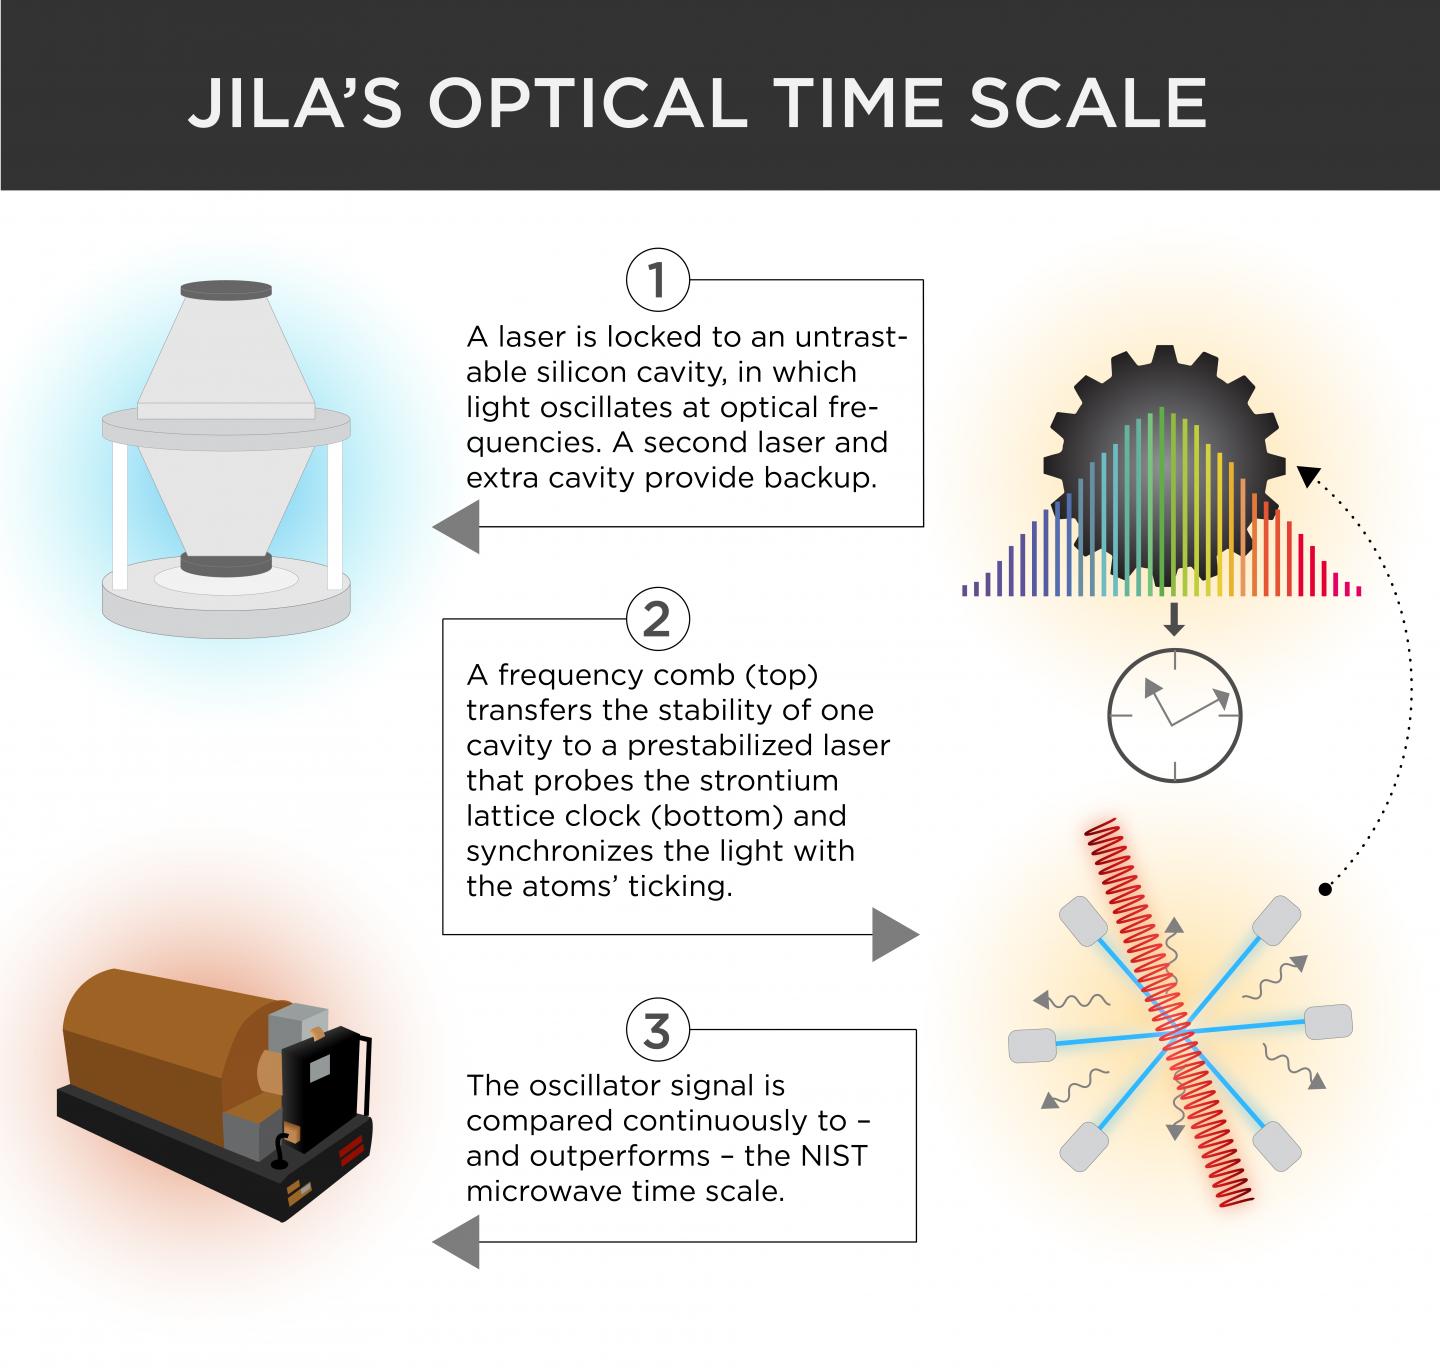 JILA's Optical Time Scale